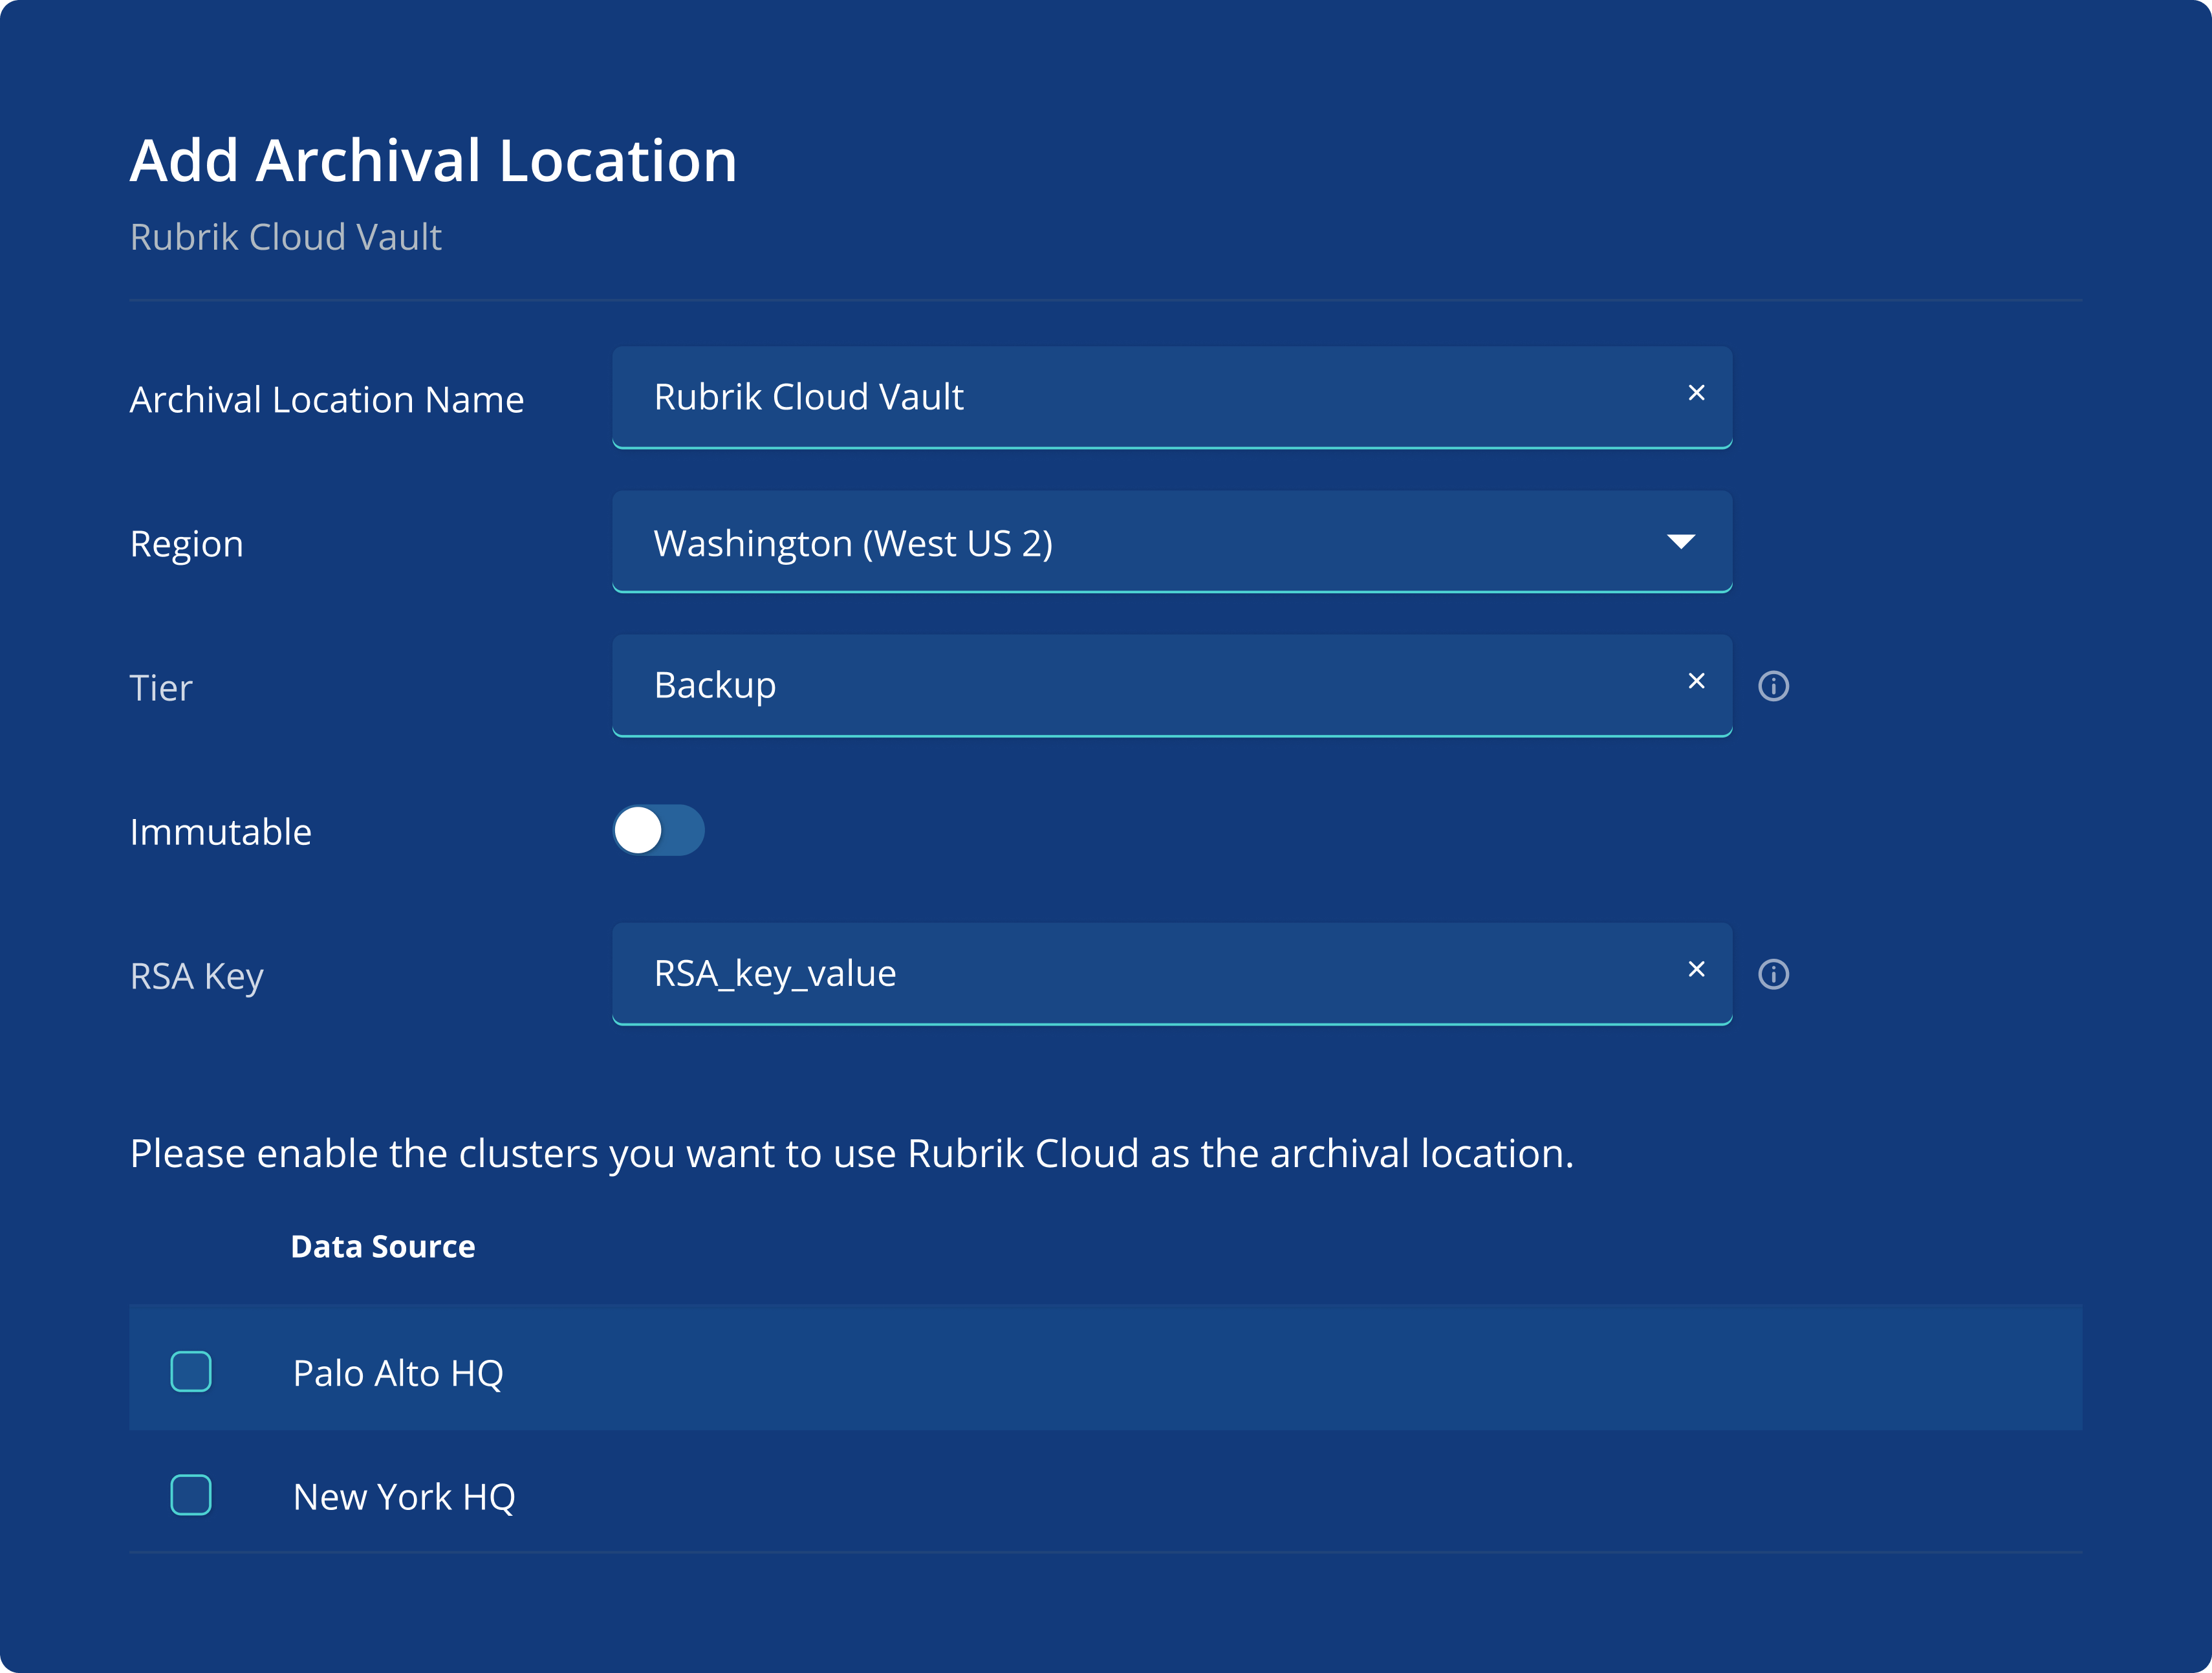 Add archival location